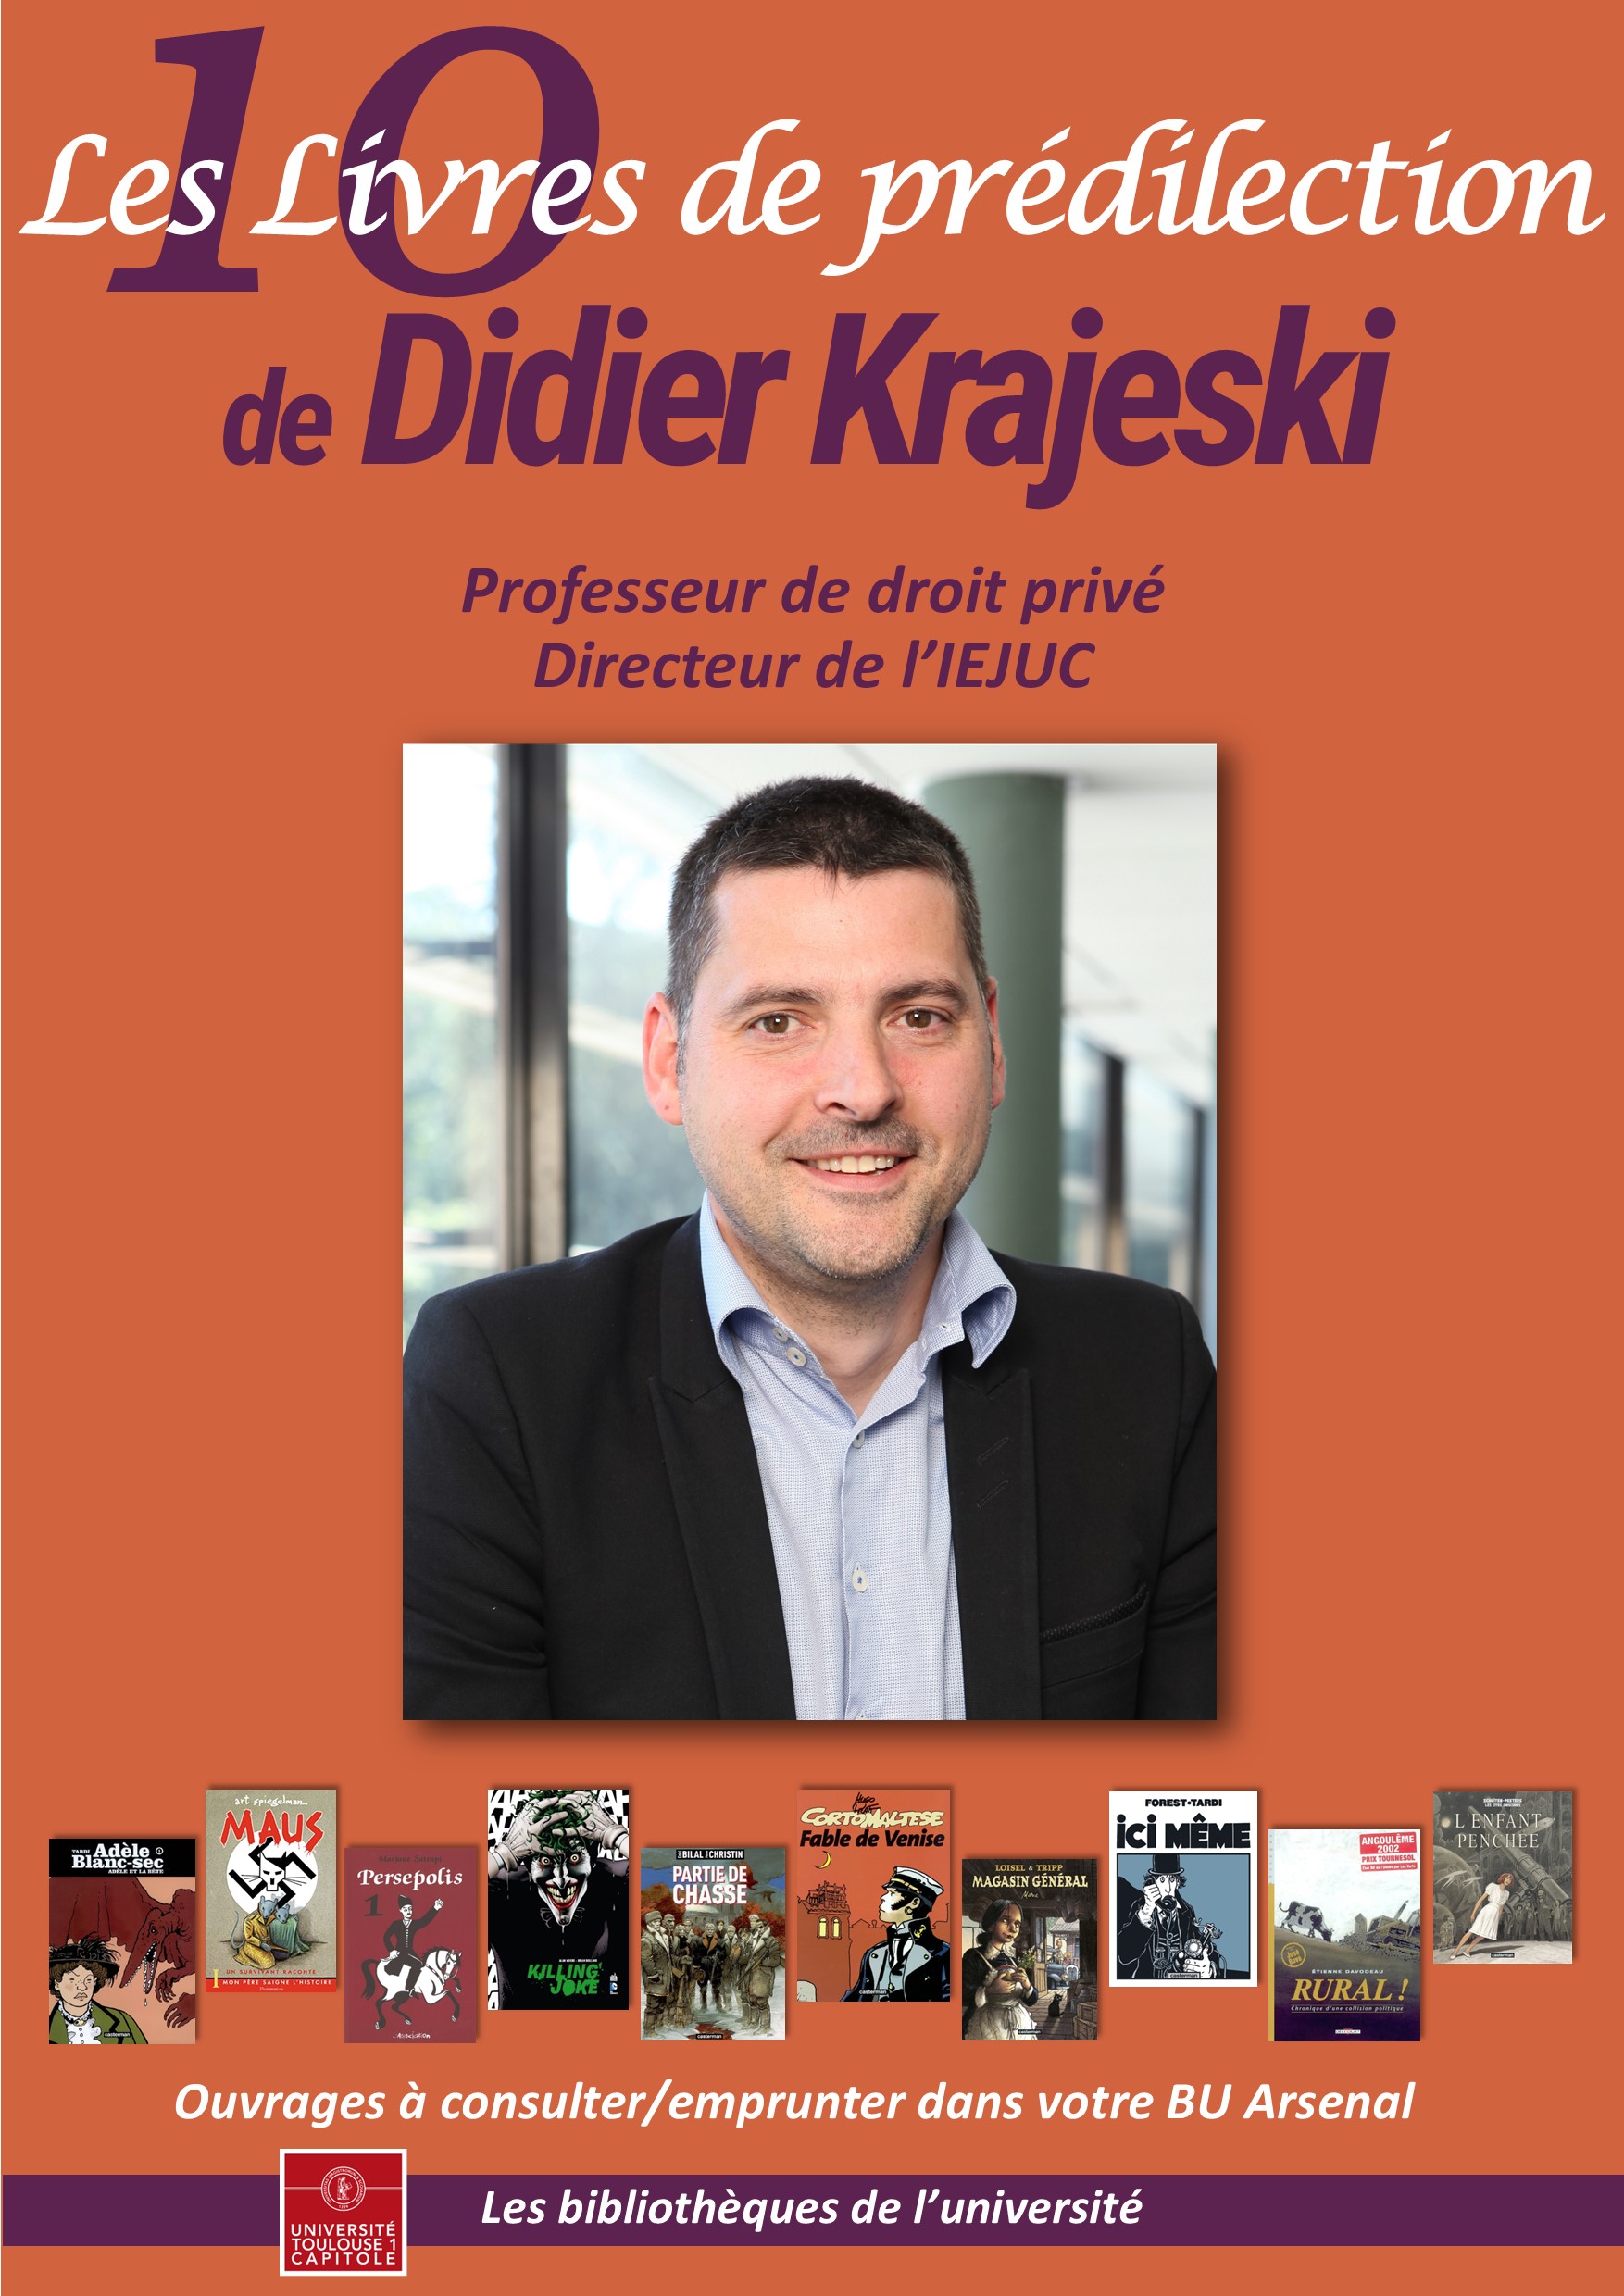 Didier Krajeski